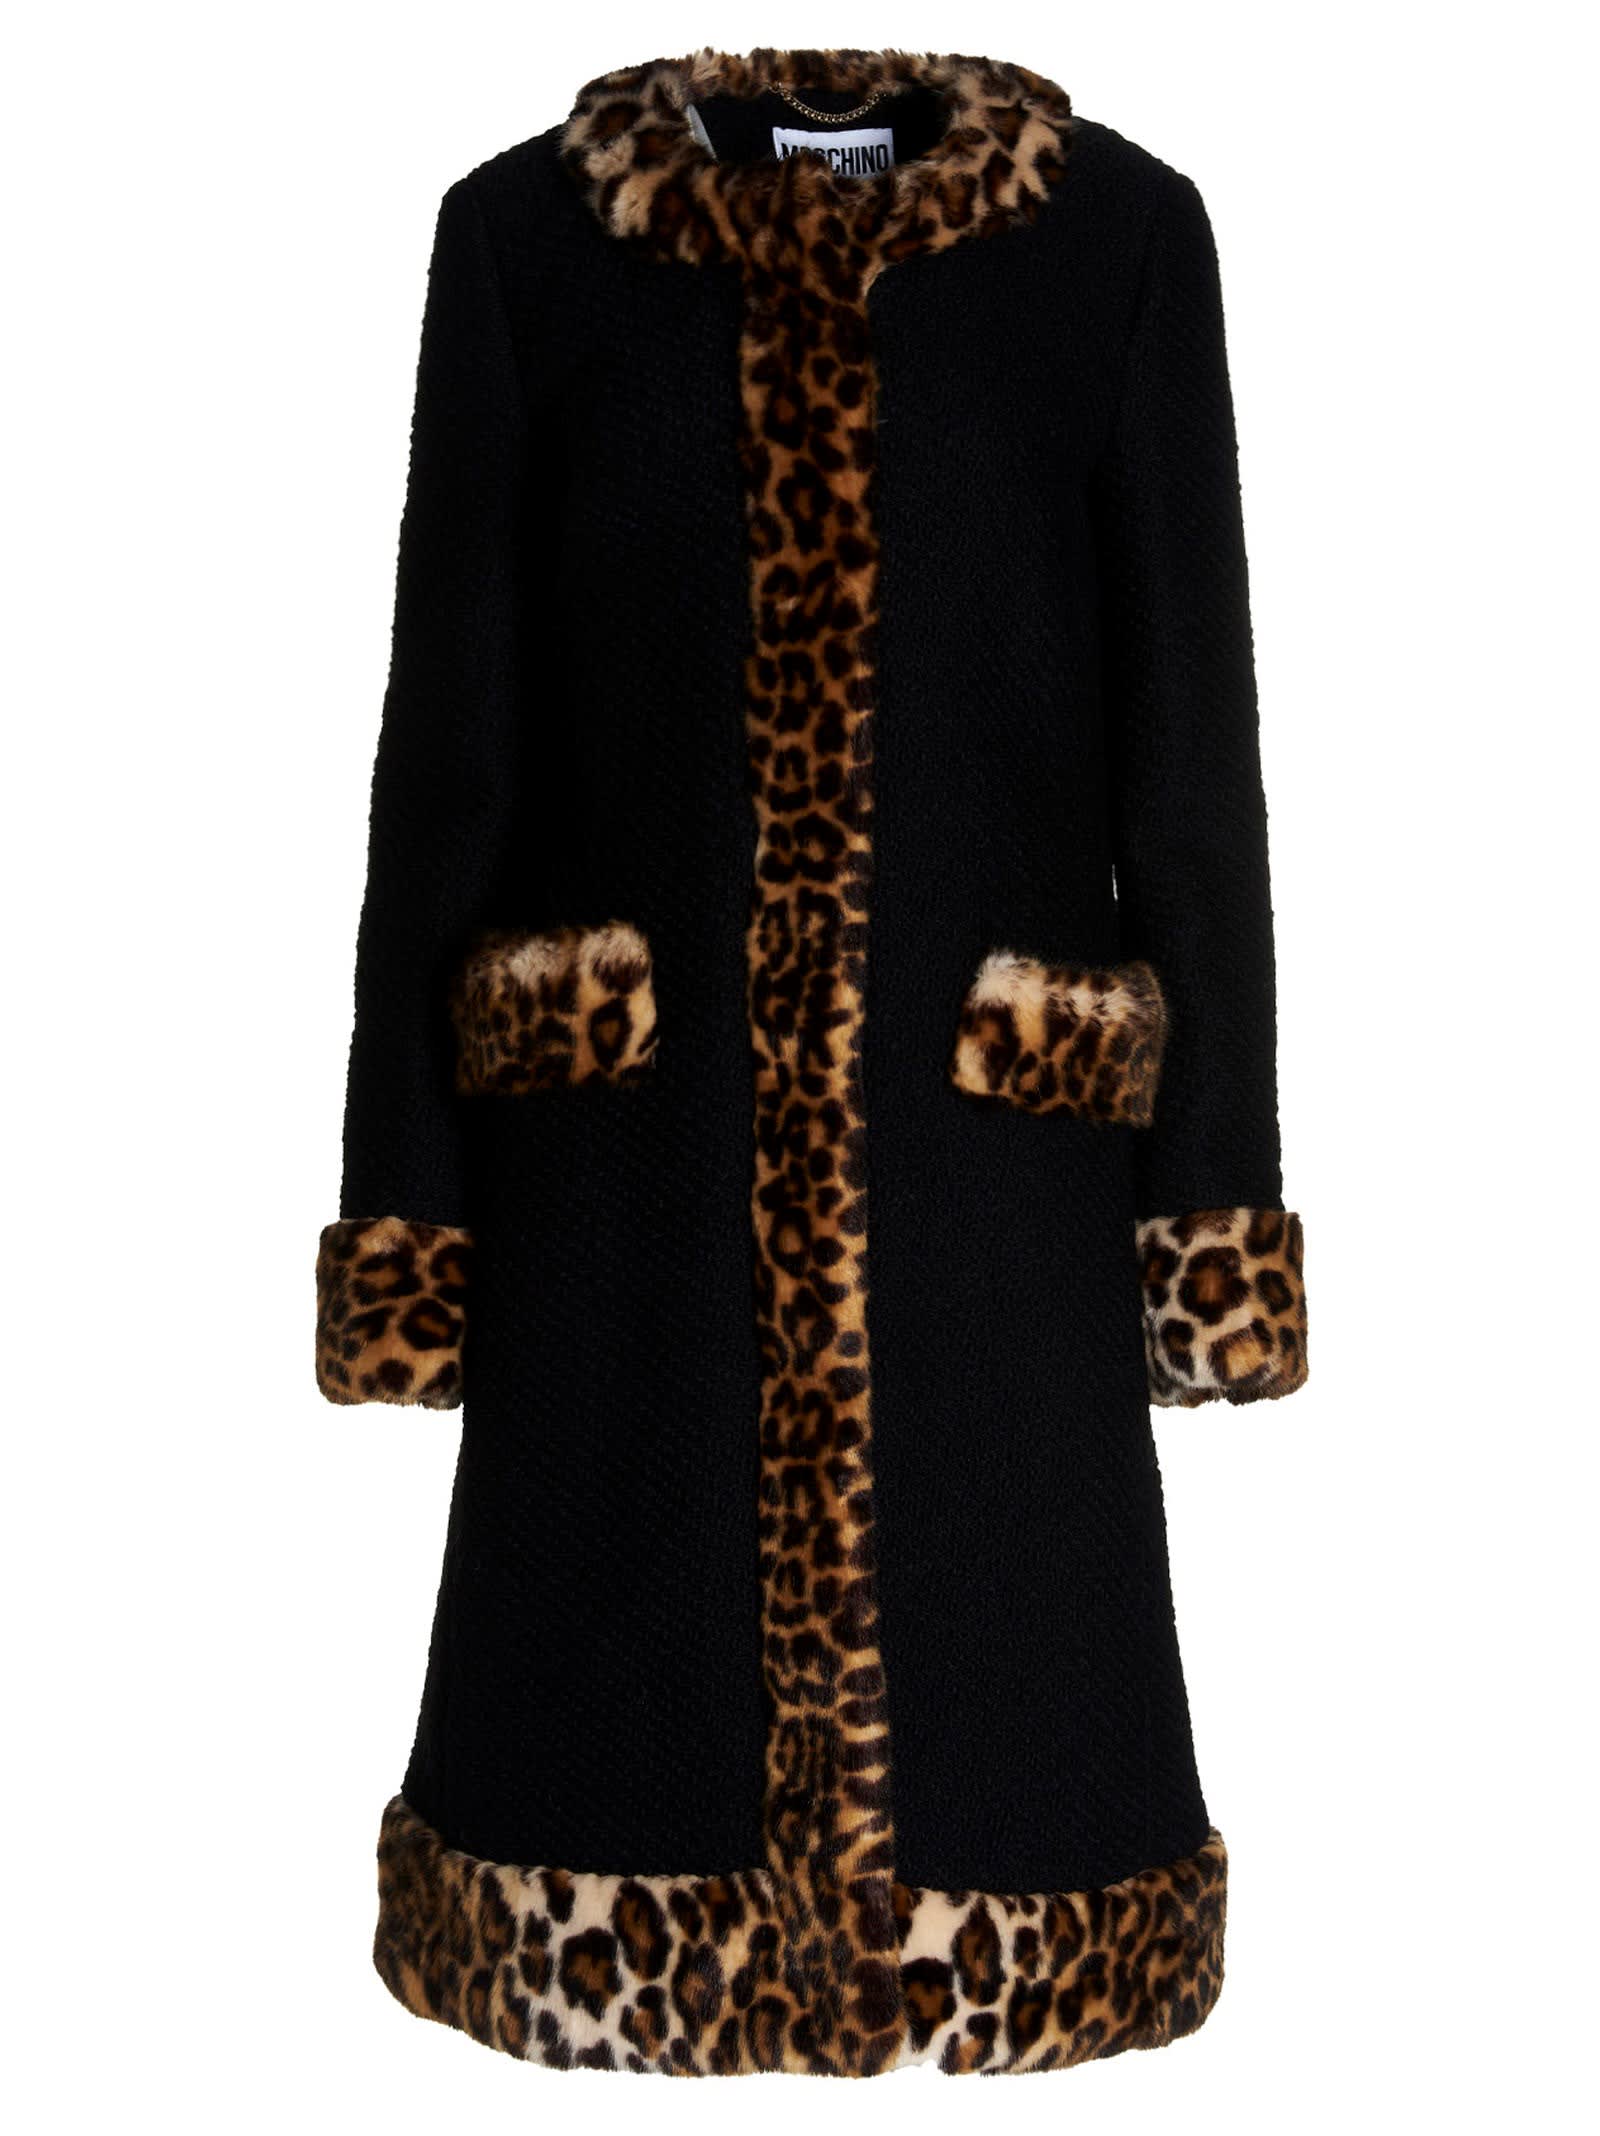 Moschino Eco Fur Detail Blazer Jacket